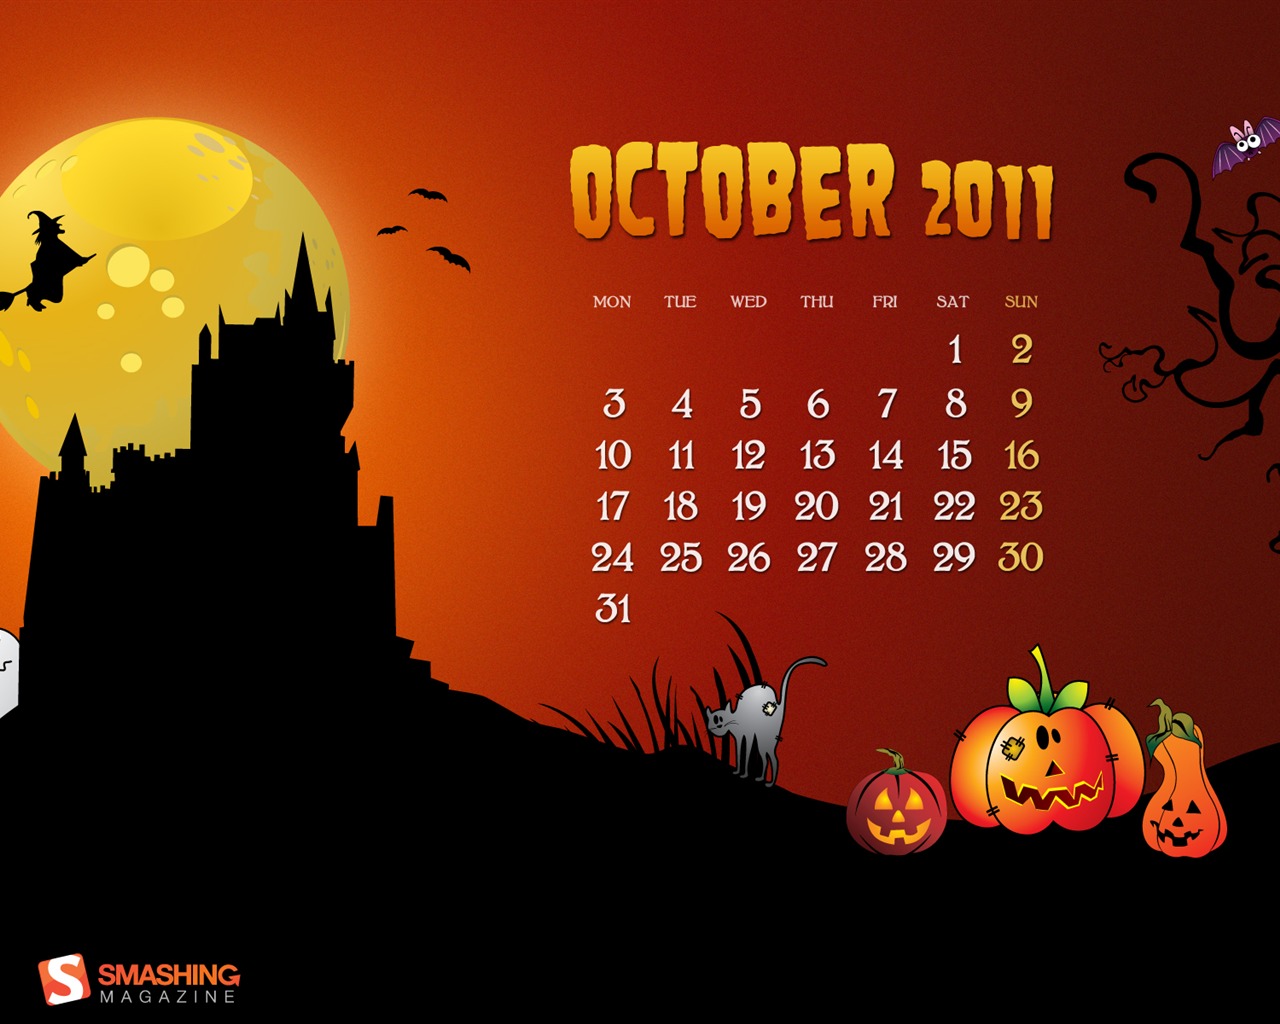 October 2011 Calendar Wallpaper (1) #1 - 1280x1024